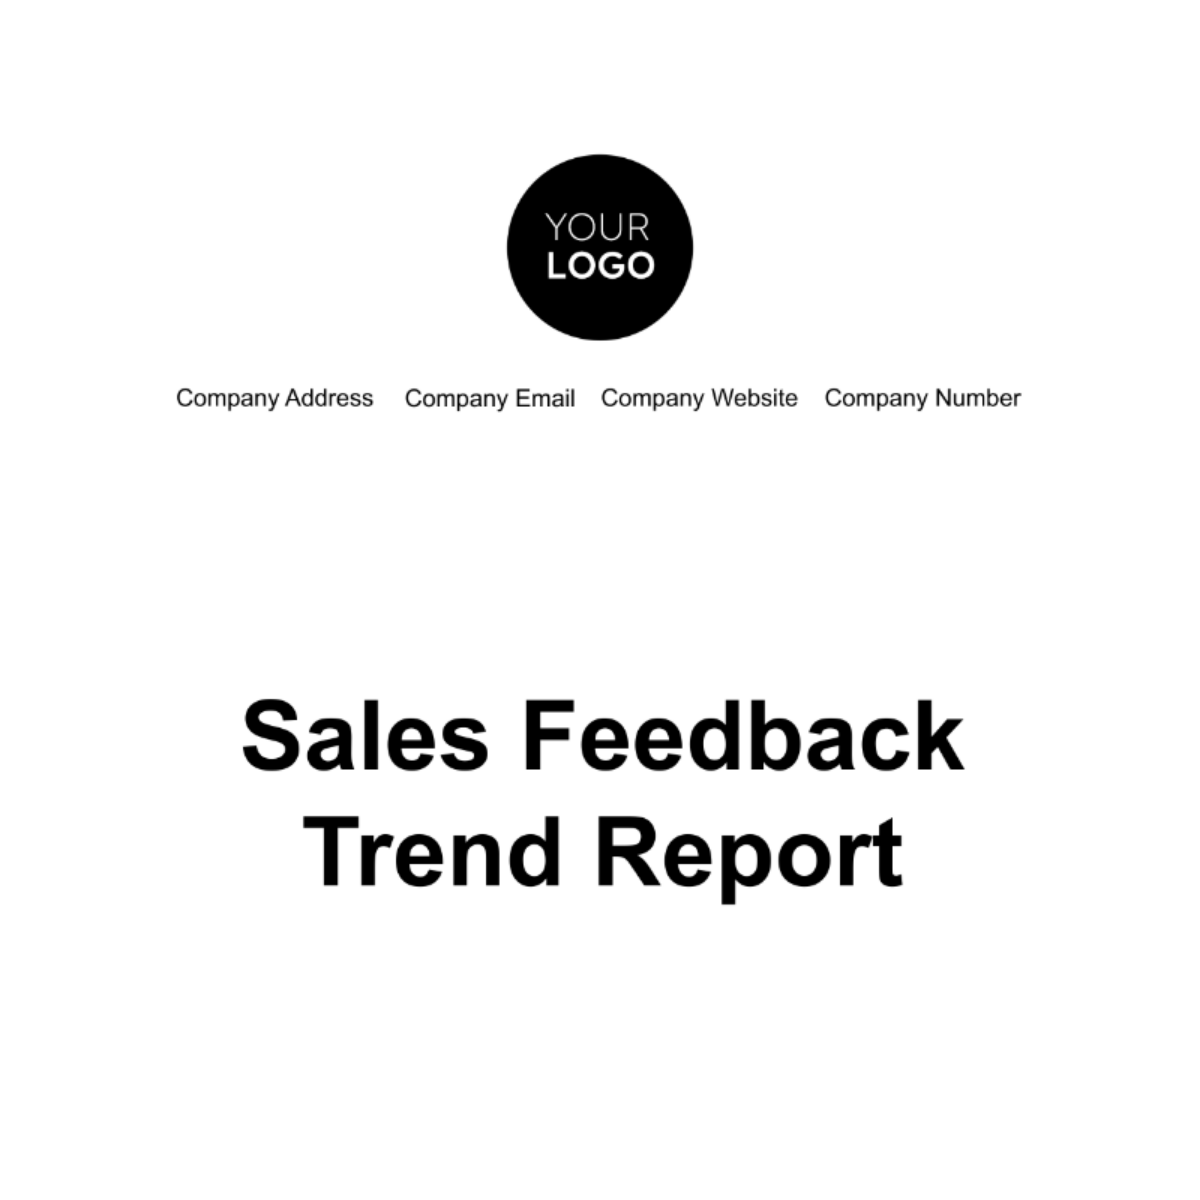 Sales Feedback Trend Report Template